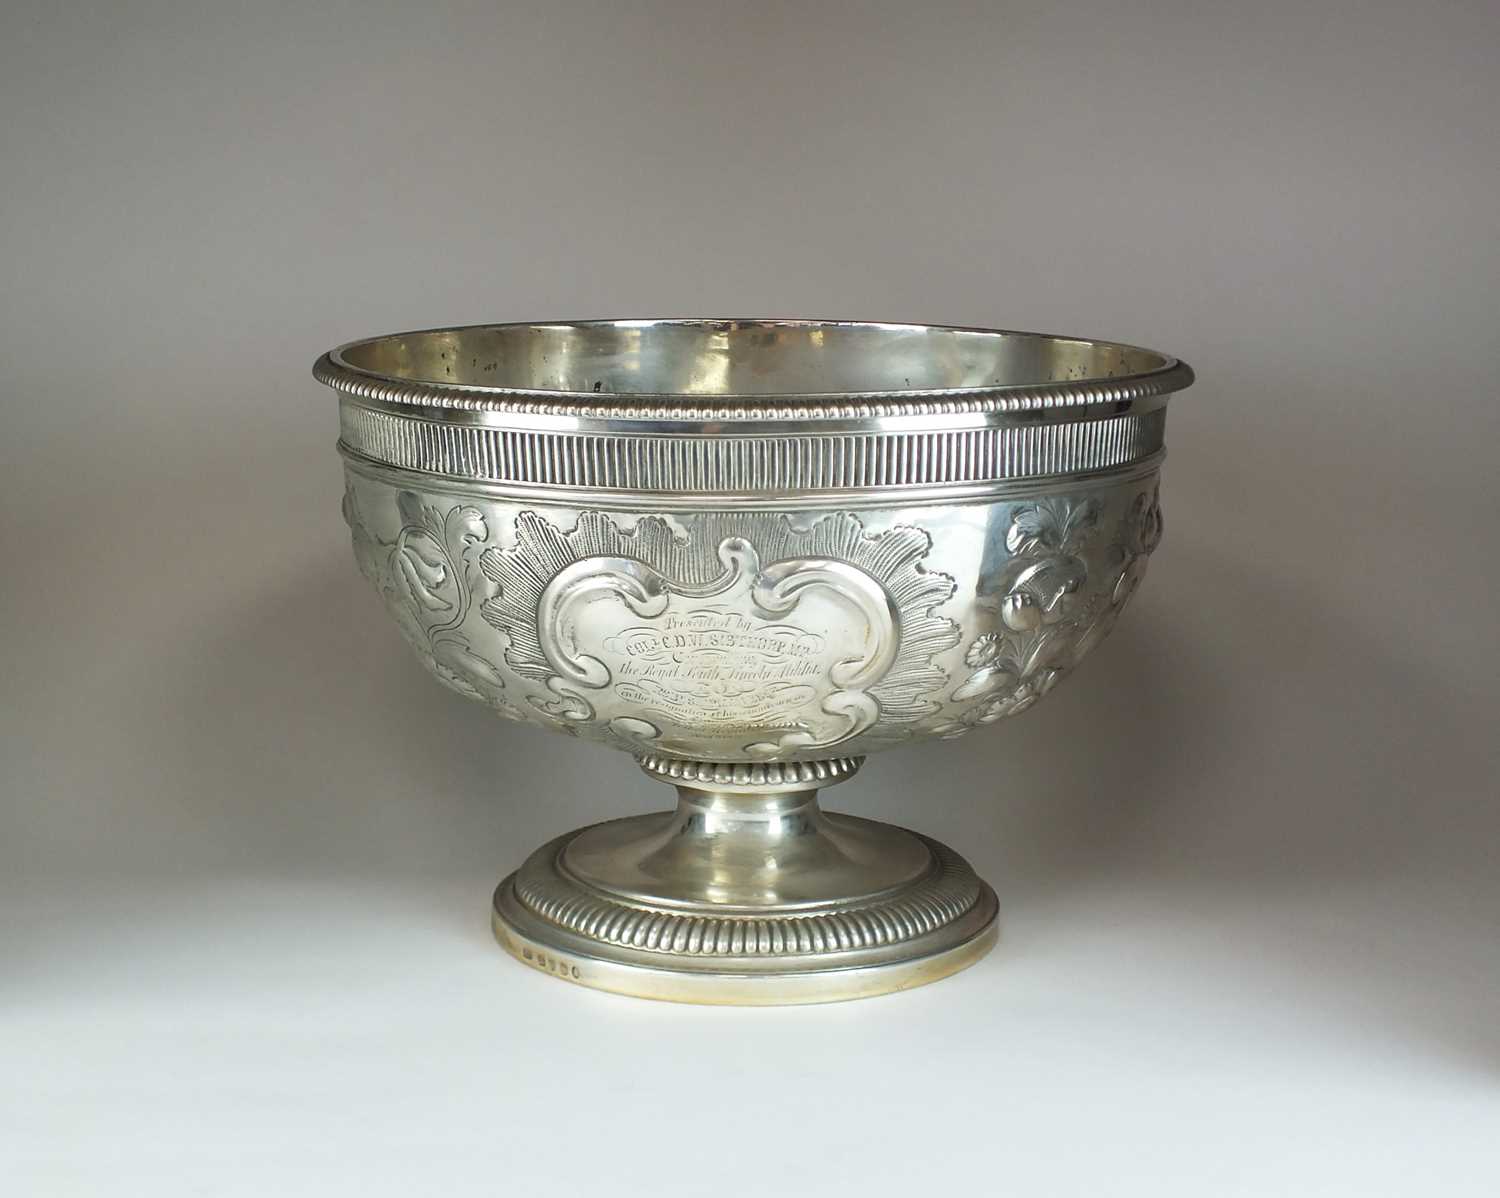 1 - A George III pedestal bowl by Paul Storr